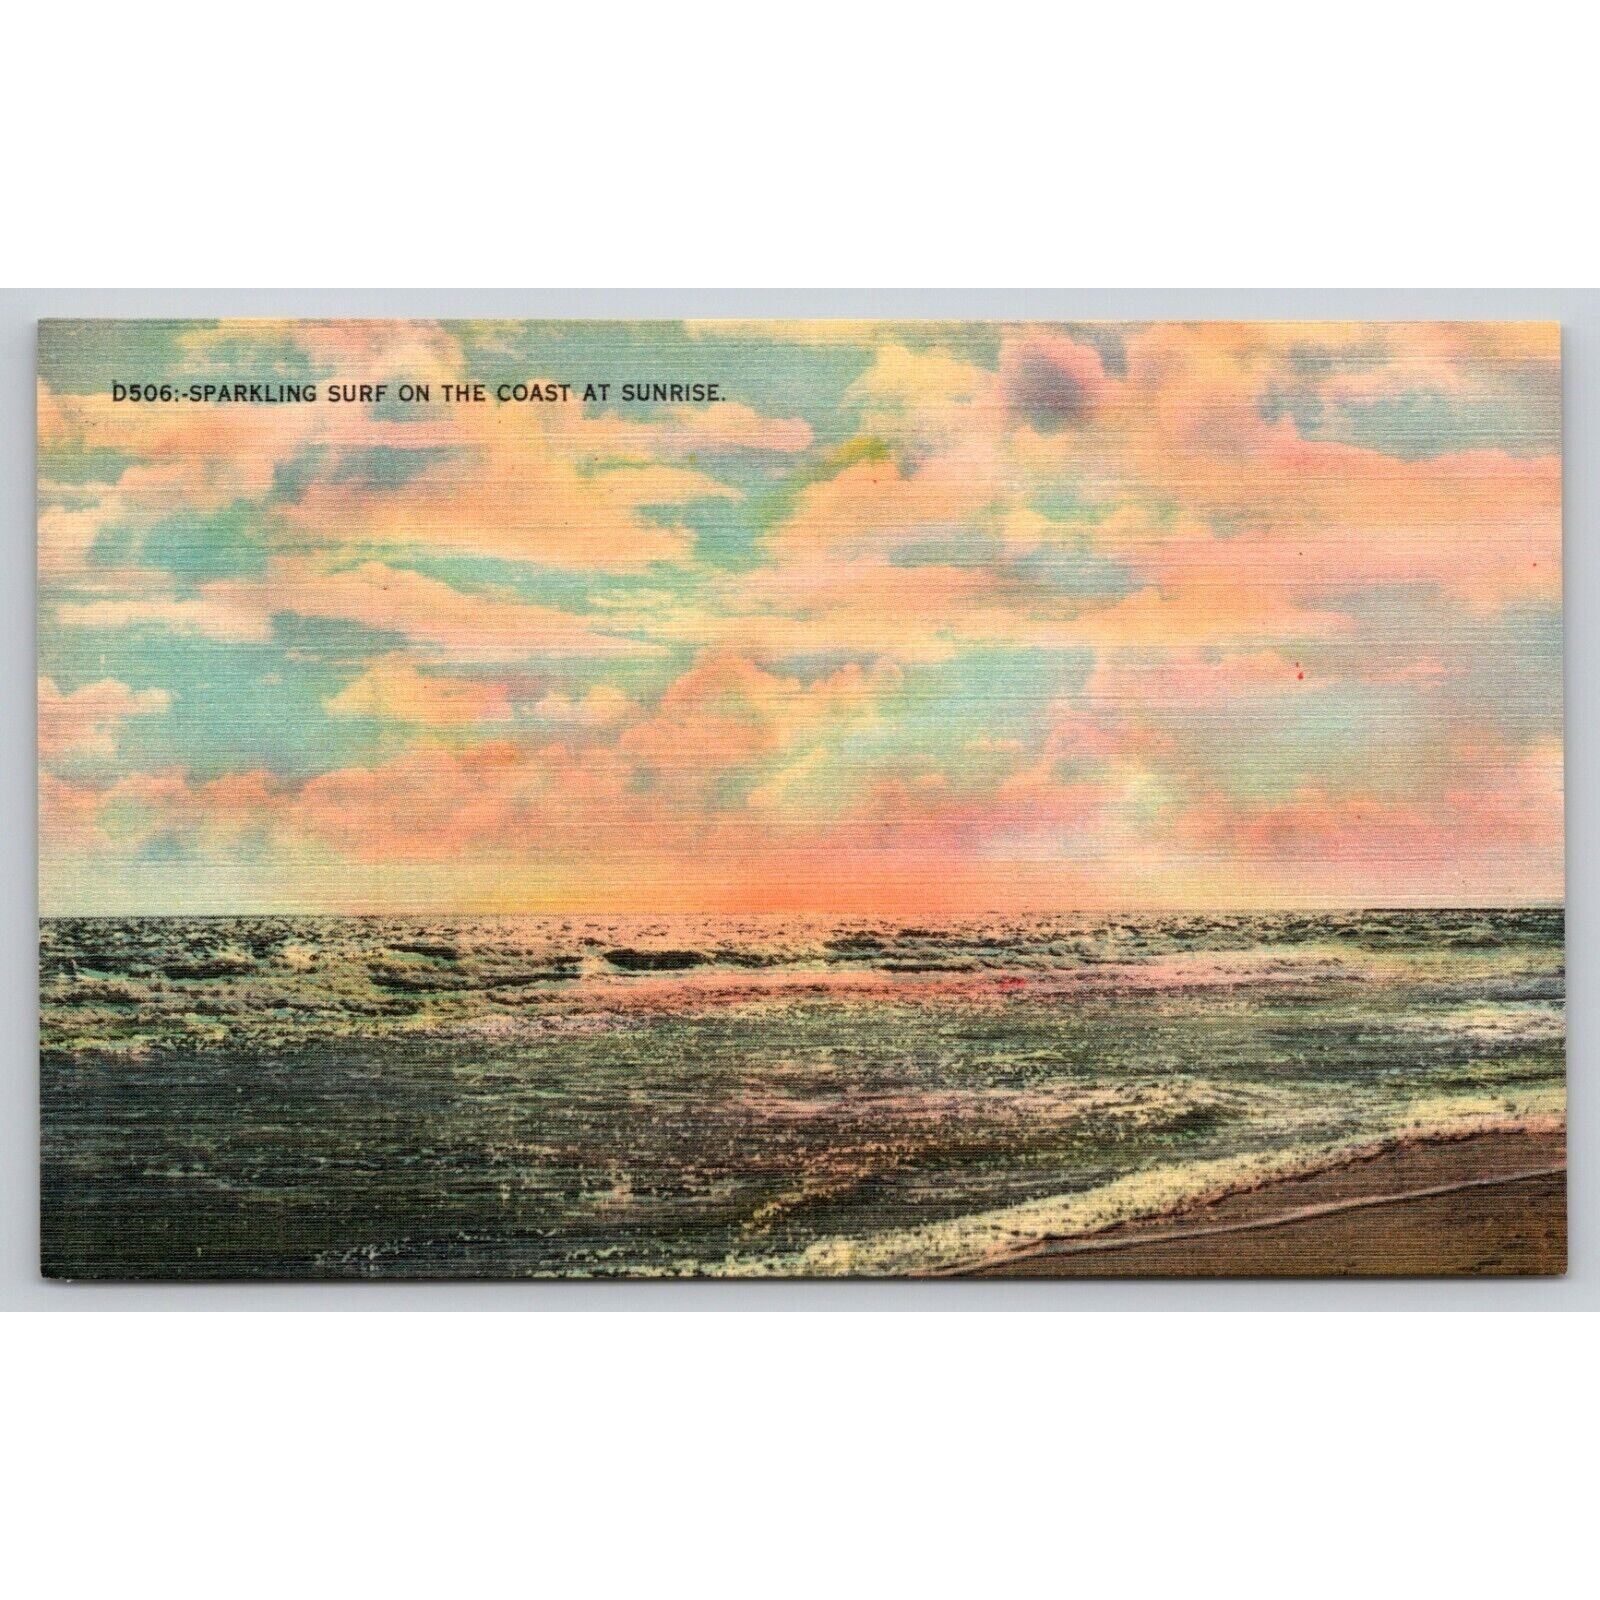 Postcard Sparkling Surf On The Coast At Sunrise